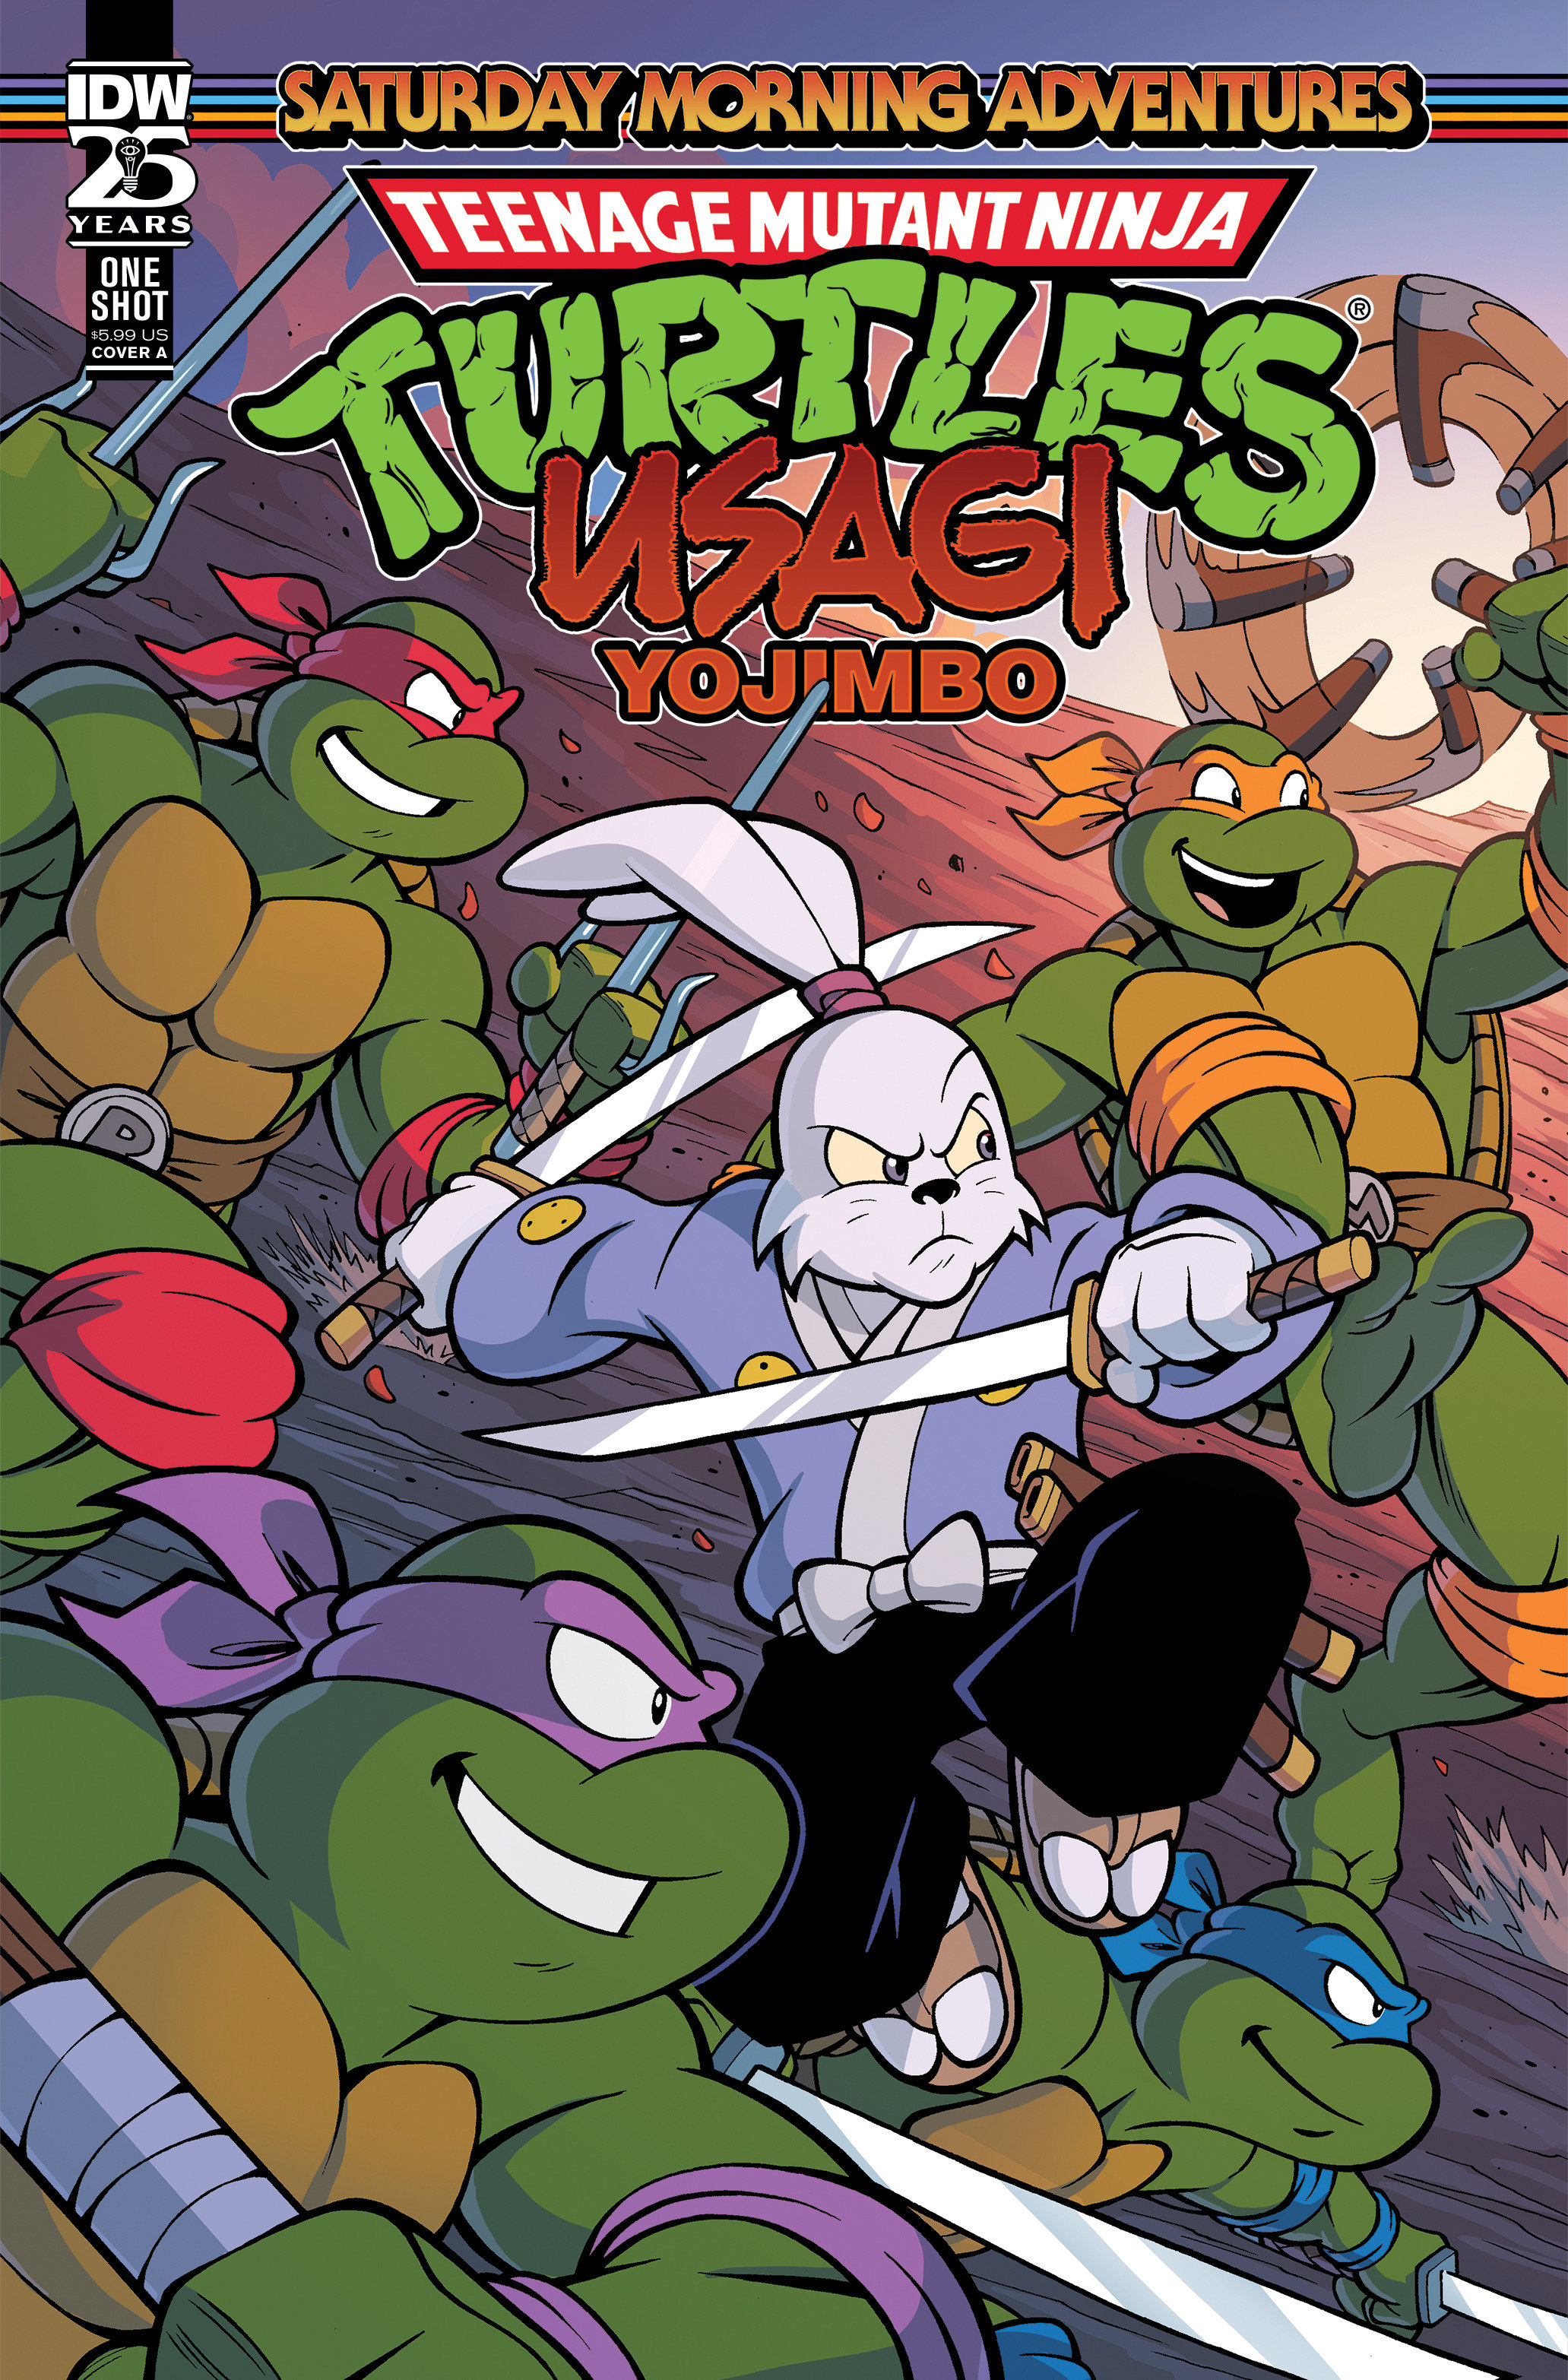 Teenage Mutant Ninja Turtles/Usagi Yojimbo: Saturday Morning Adventures Cover A Lawrence